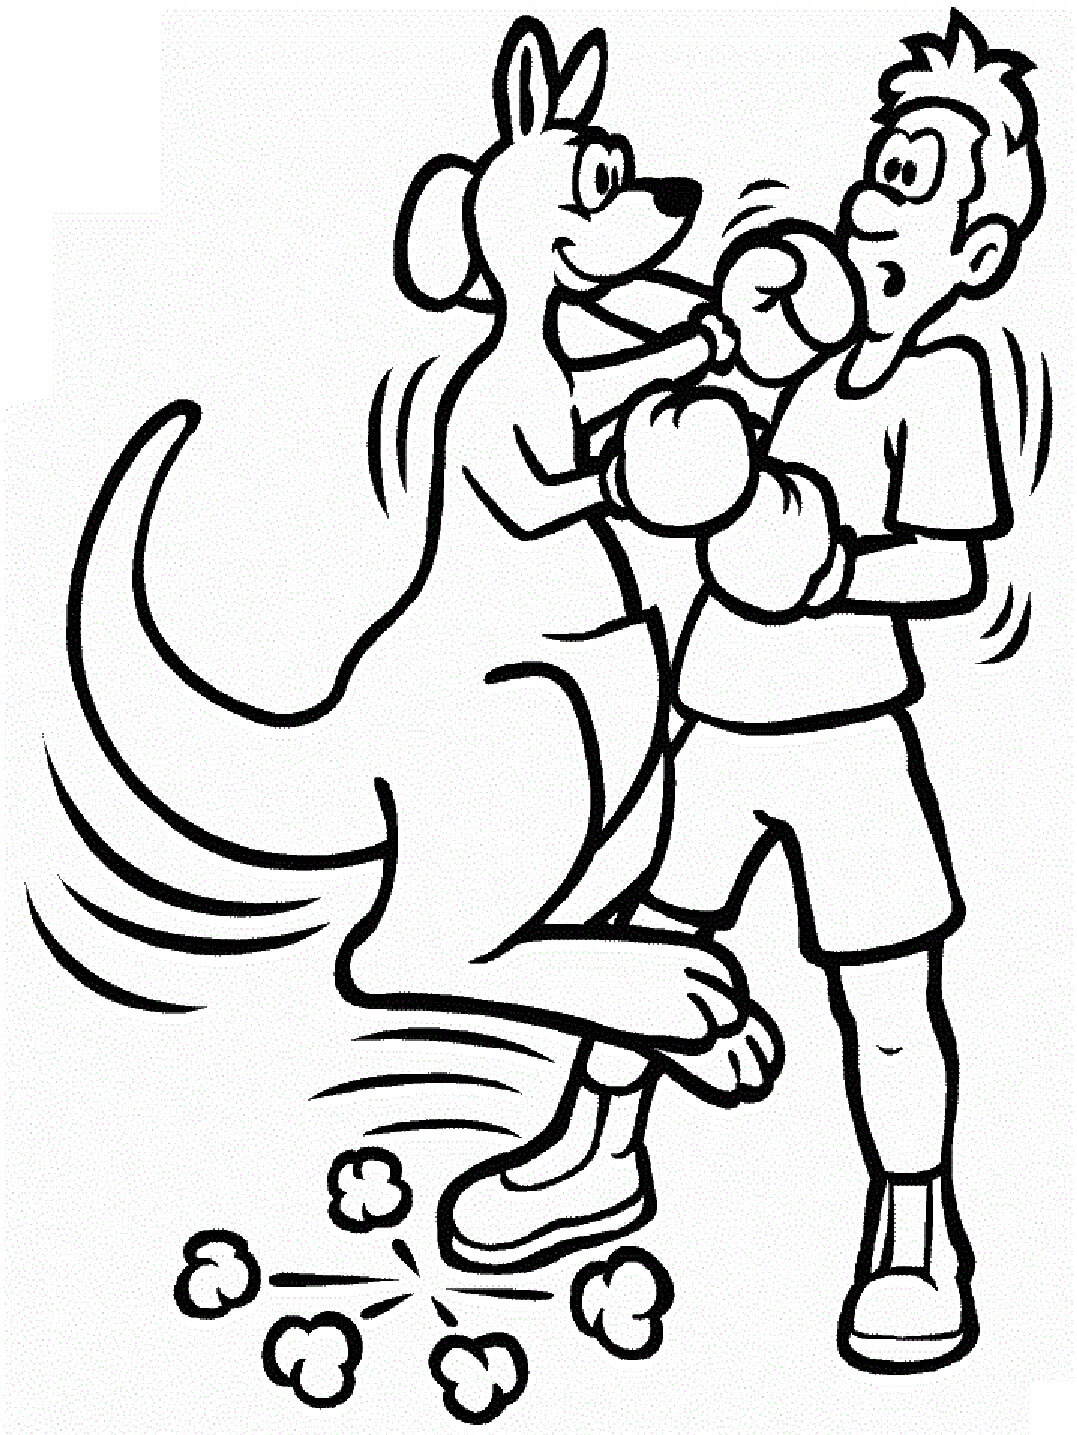 Drawing Kangaroo vs Boxer coloring page